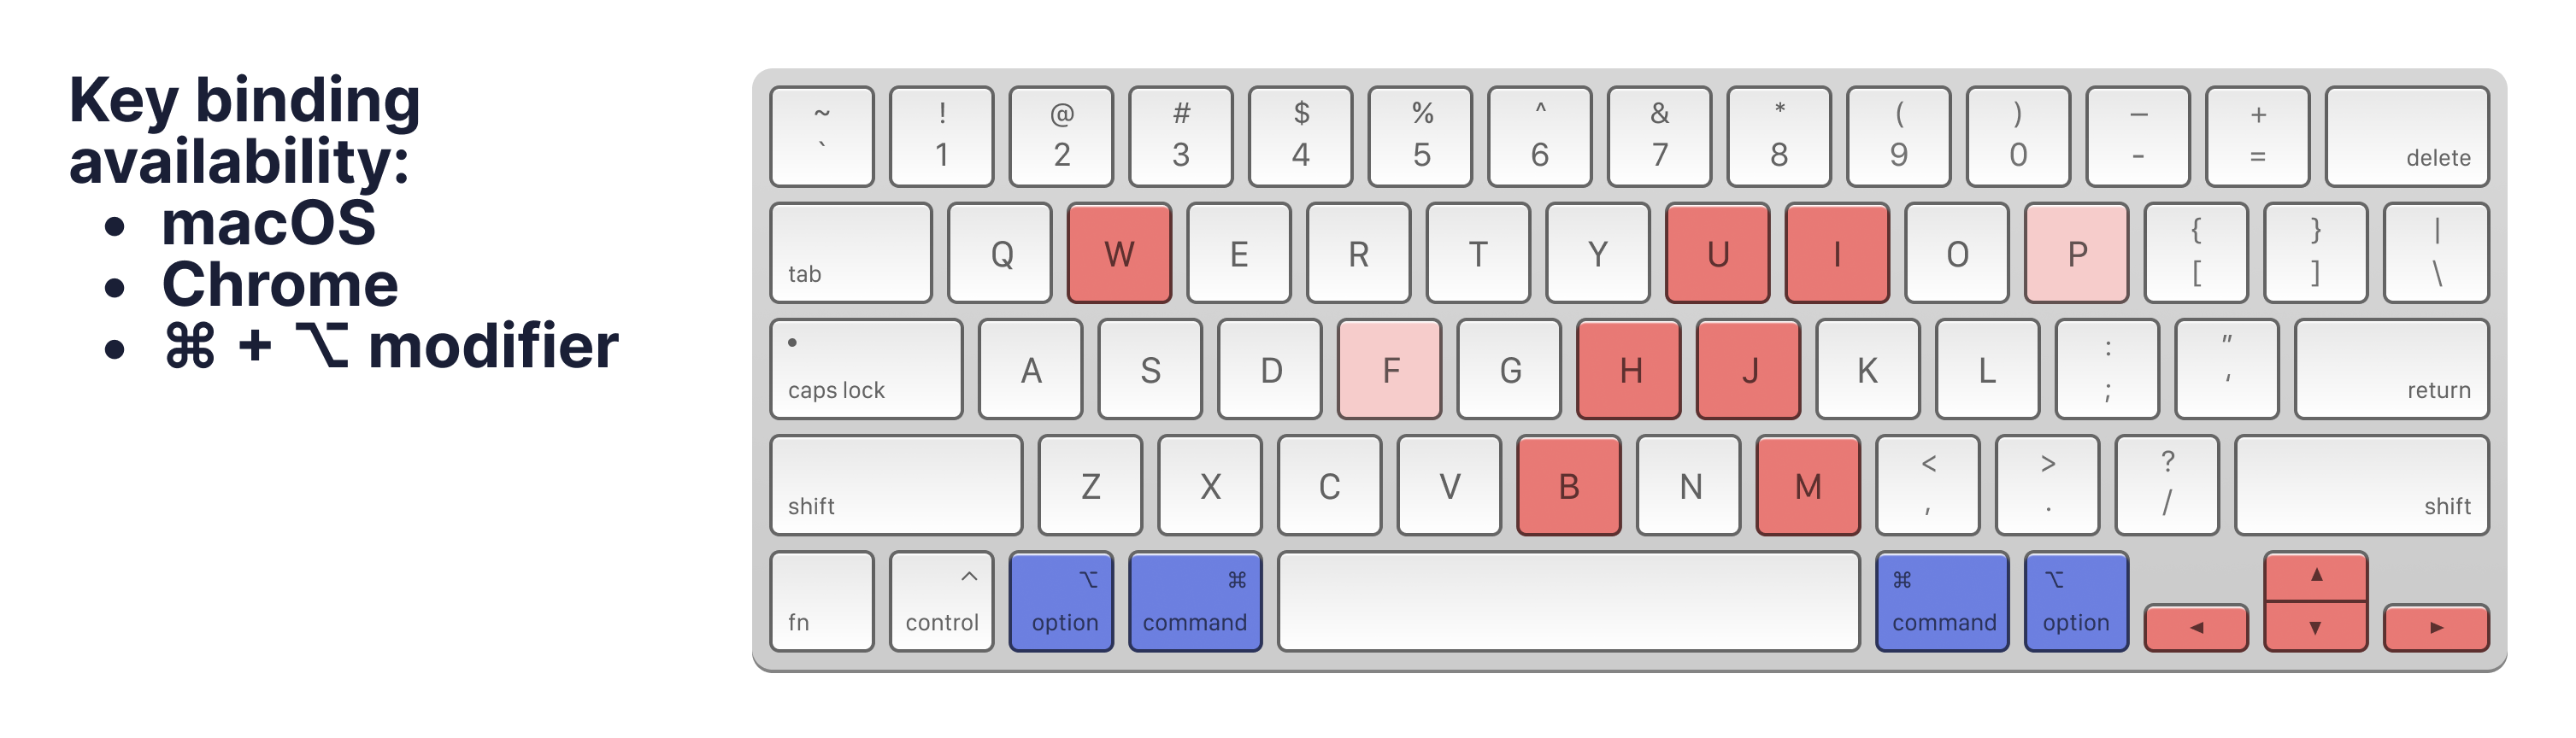 Keyboard shortcut availability: macOS+Chrome+cmd+option